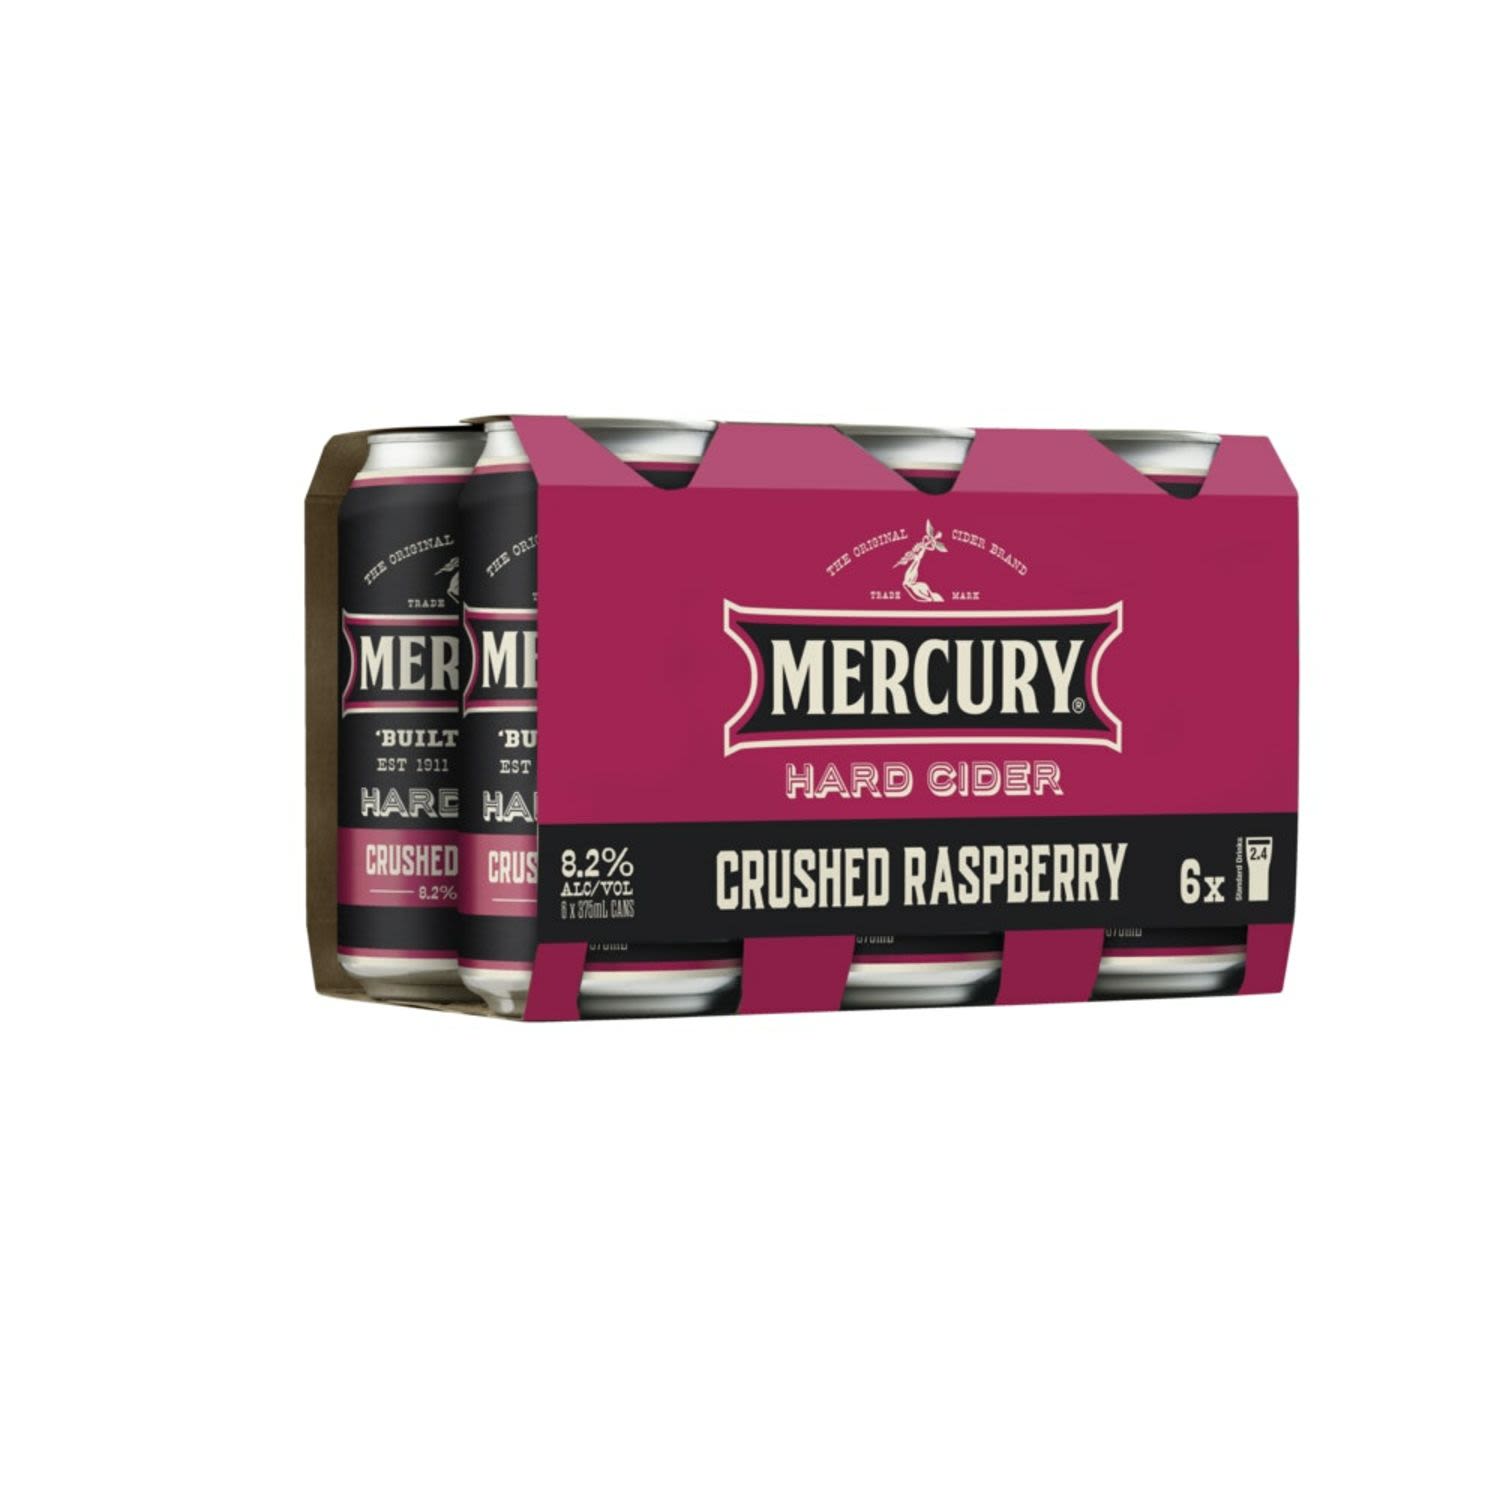 Mercury Hard Cider Crushed Raspberry 375mL Cans<br /> <br />Alcohol Volume: 8.20%<br /><br />Pack Format: 6 Pack<br /><br />Standard Drinks: 2.4<br /><br />Pack Type: Can<br /><br />Country of Origin: Australia<br />